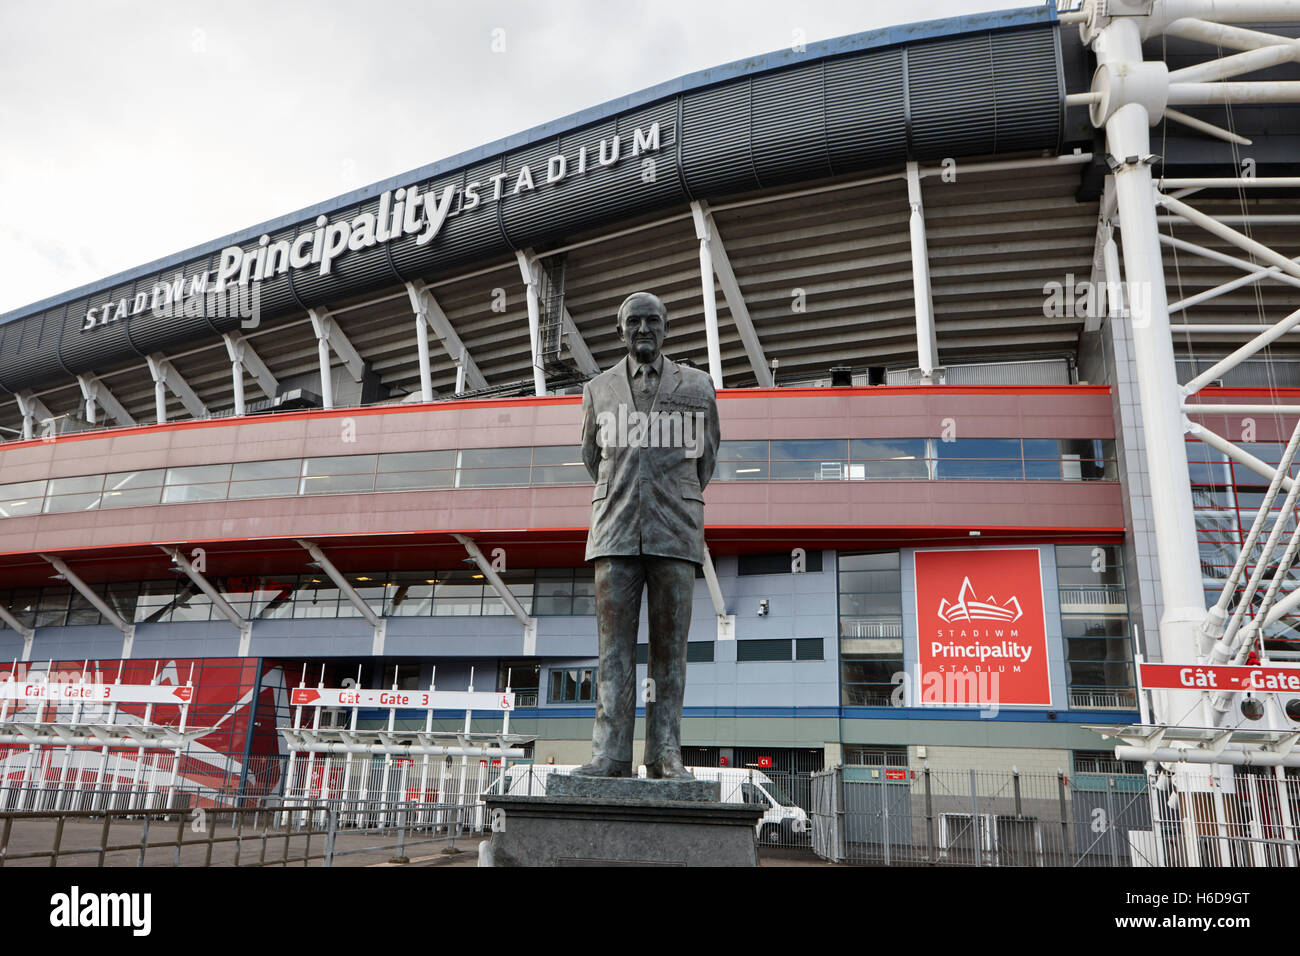 statue of sir tasker watkins Principality former millennium stadium Cardiff Wales United Kingdom Stock Photo